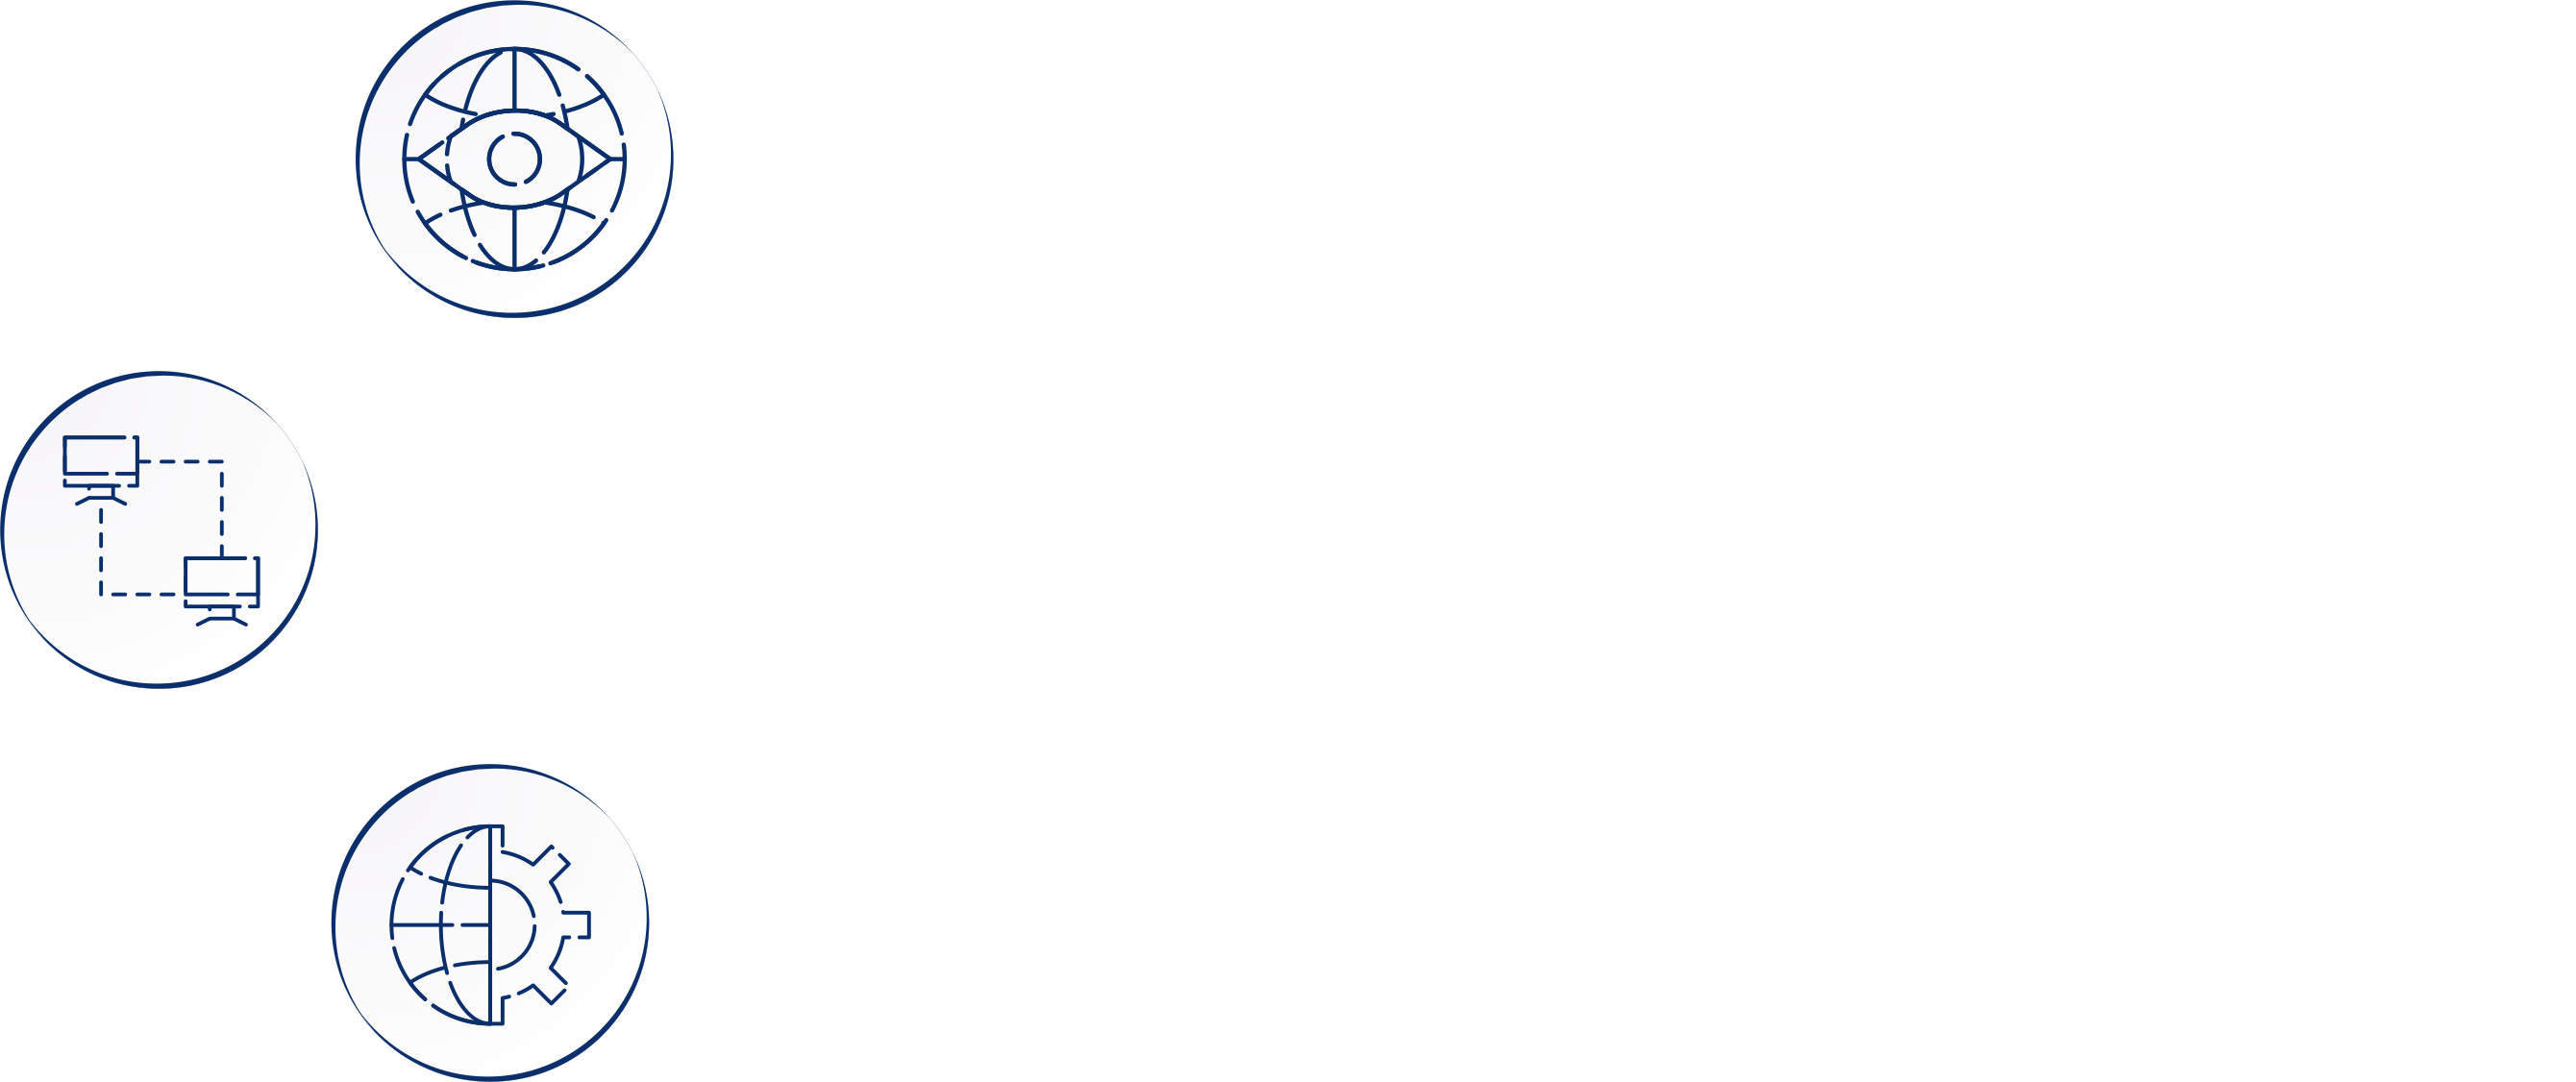 Shared Services Summit 2020 logo